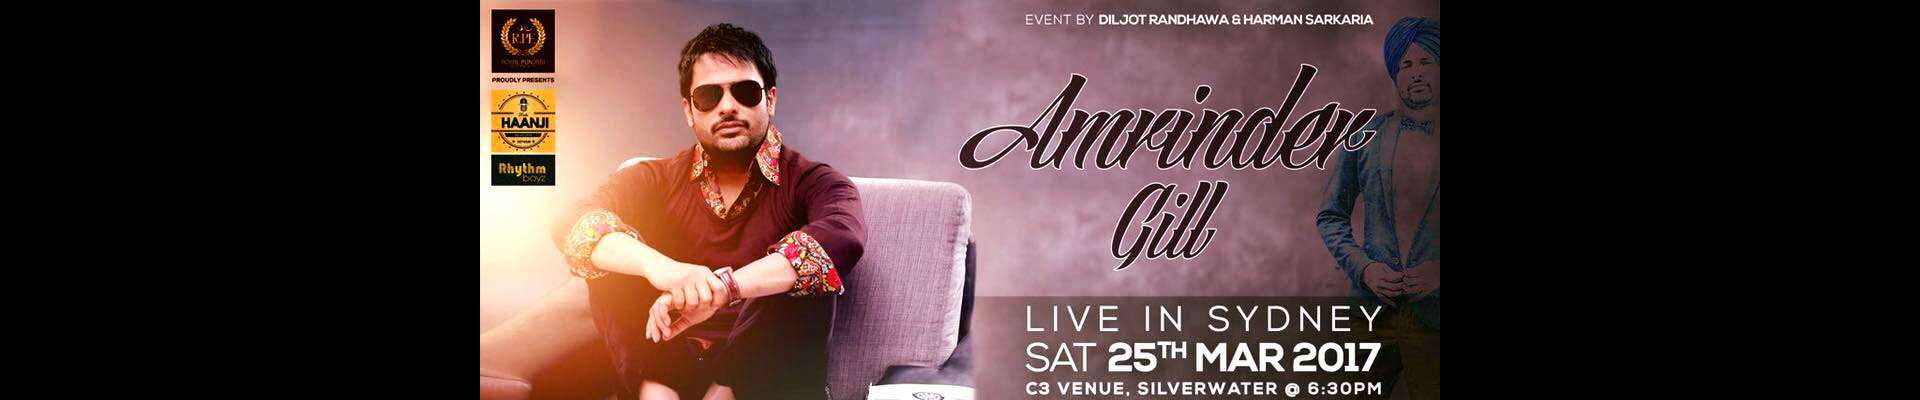 Amrinder Gill Live In Sydney 2017